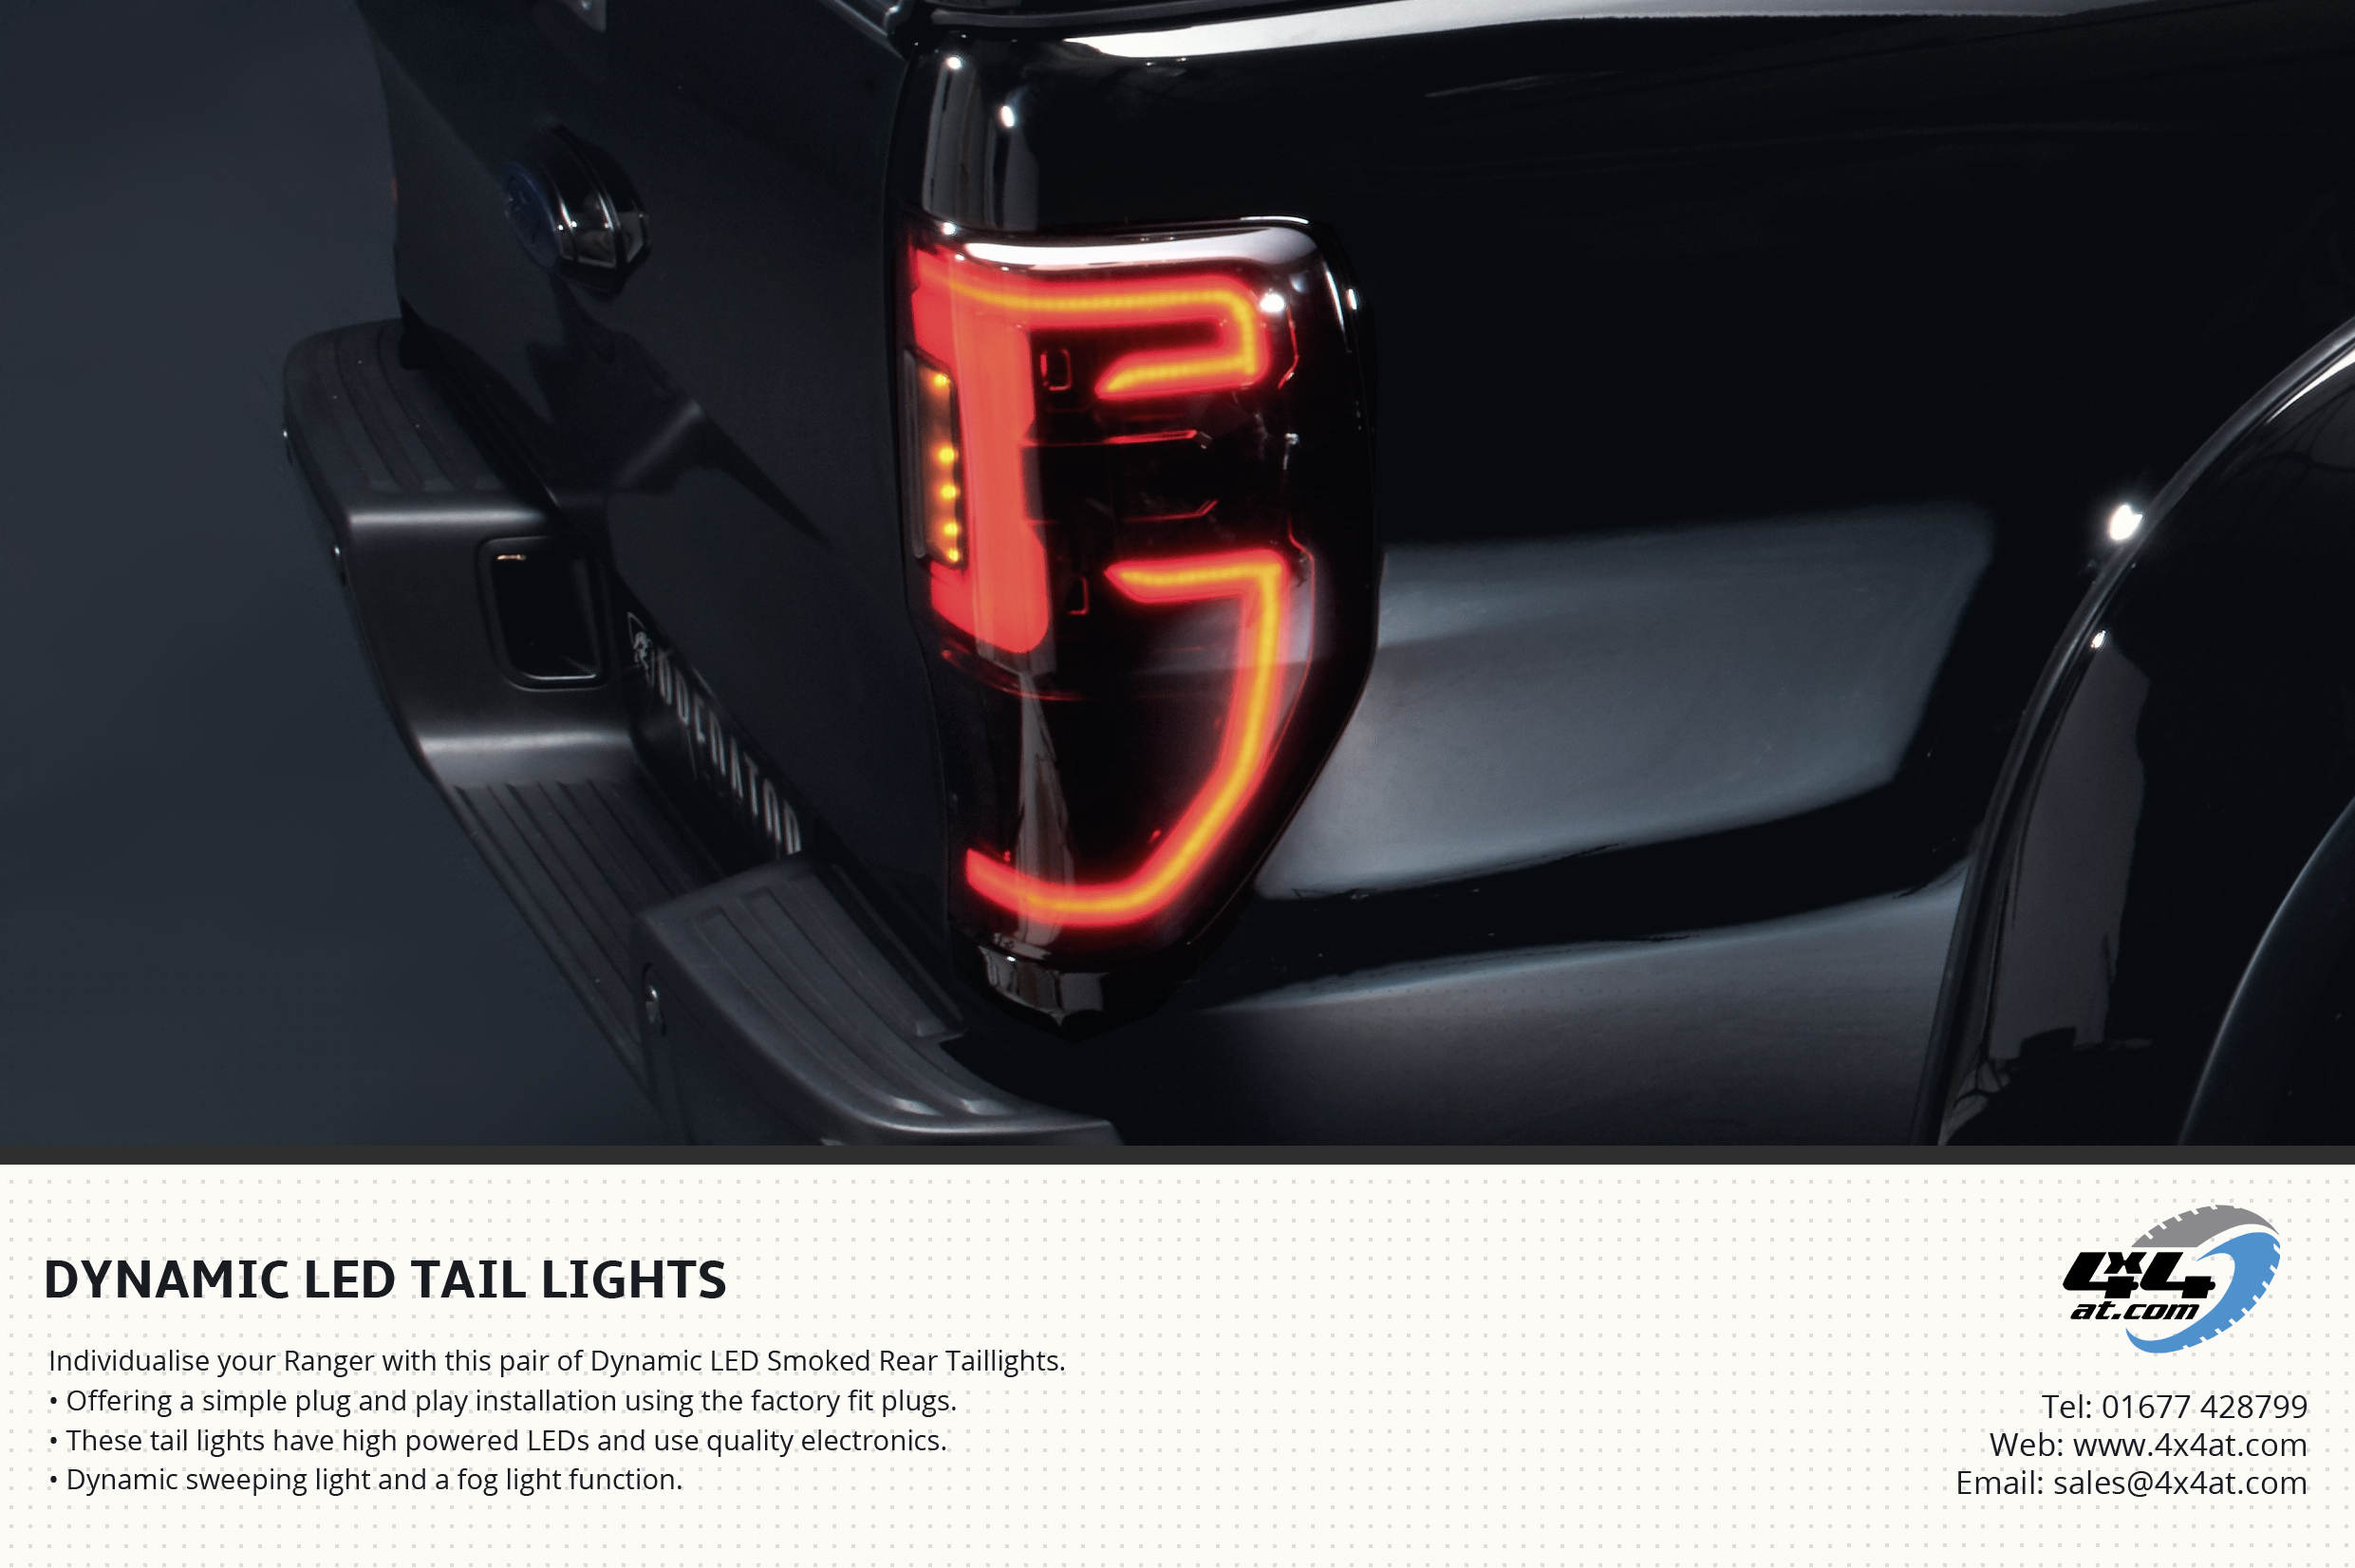 Dynamic Tail Lights Flyer for Ford Ranger